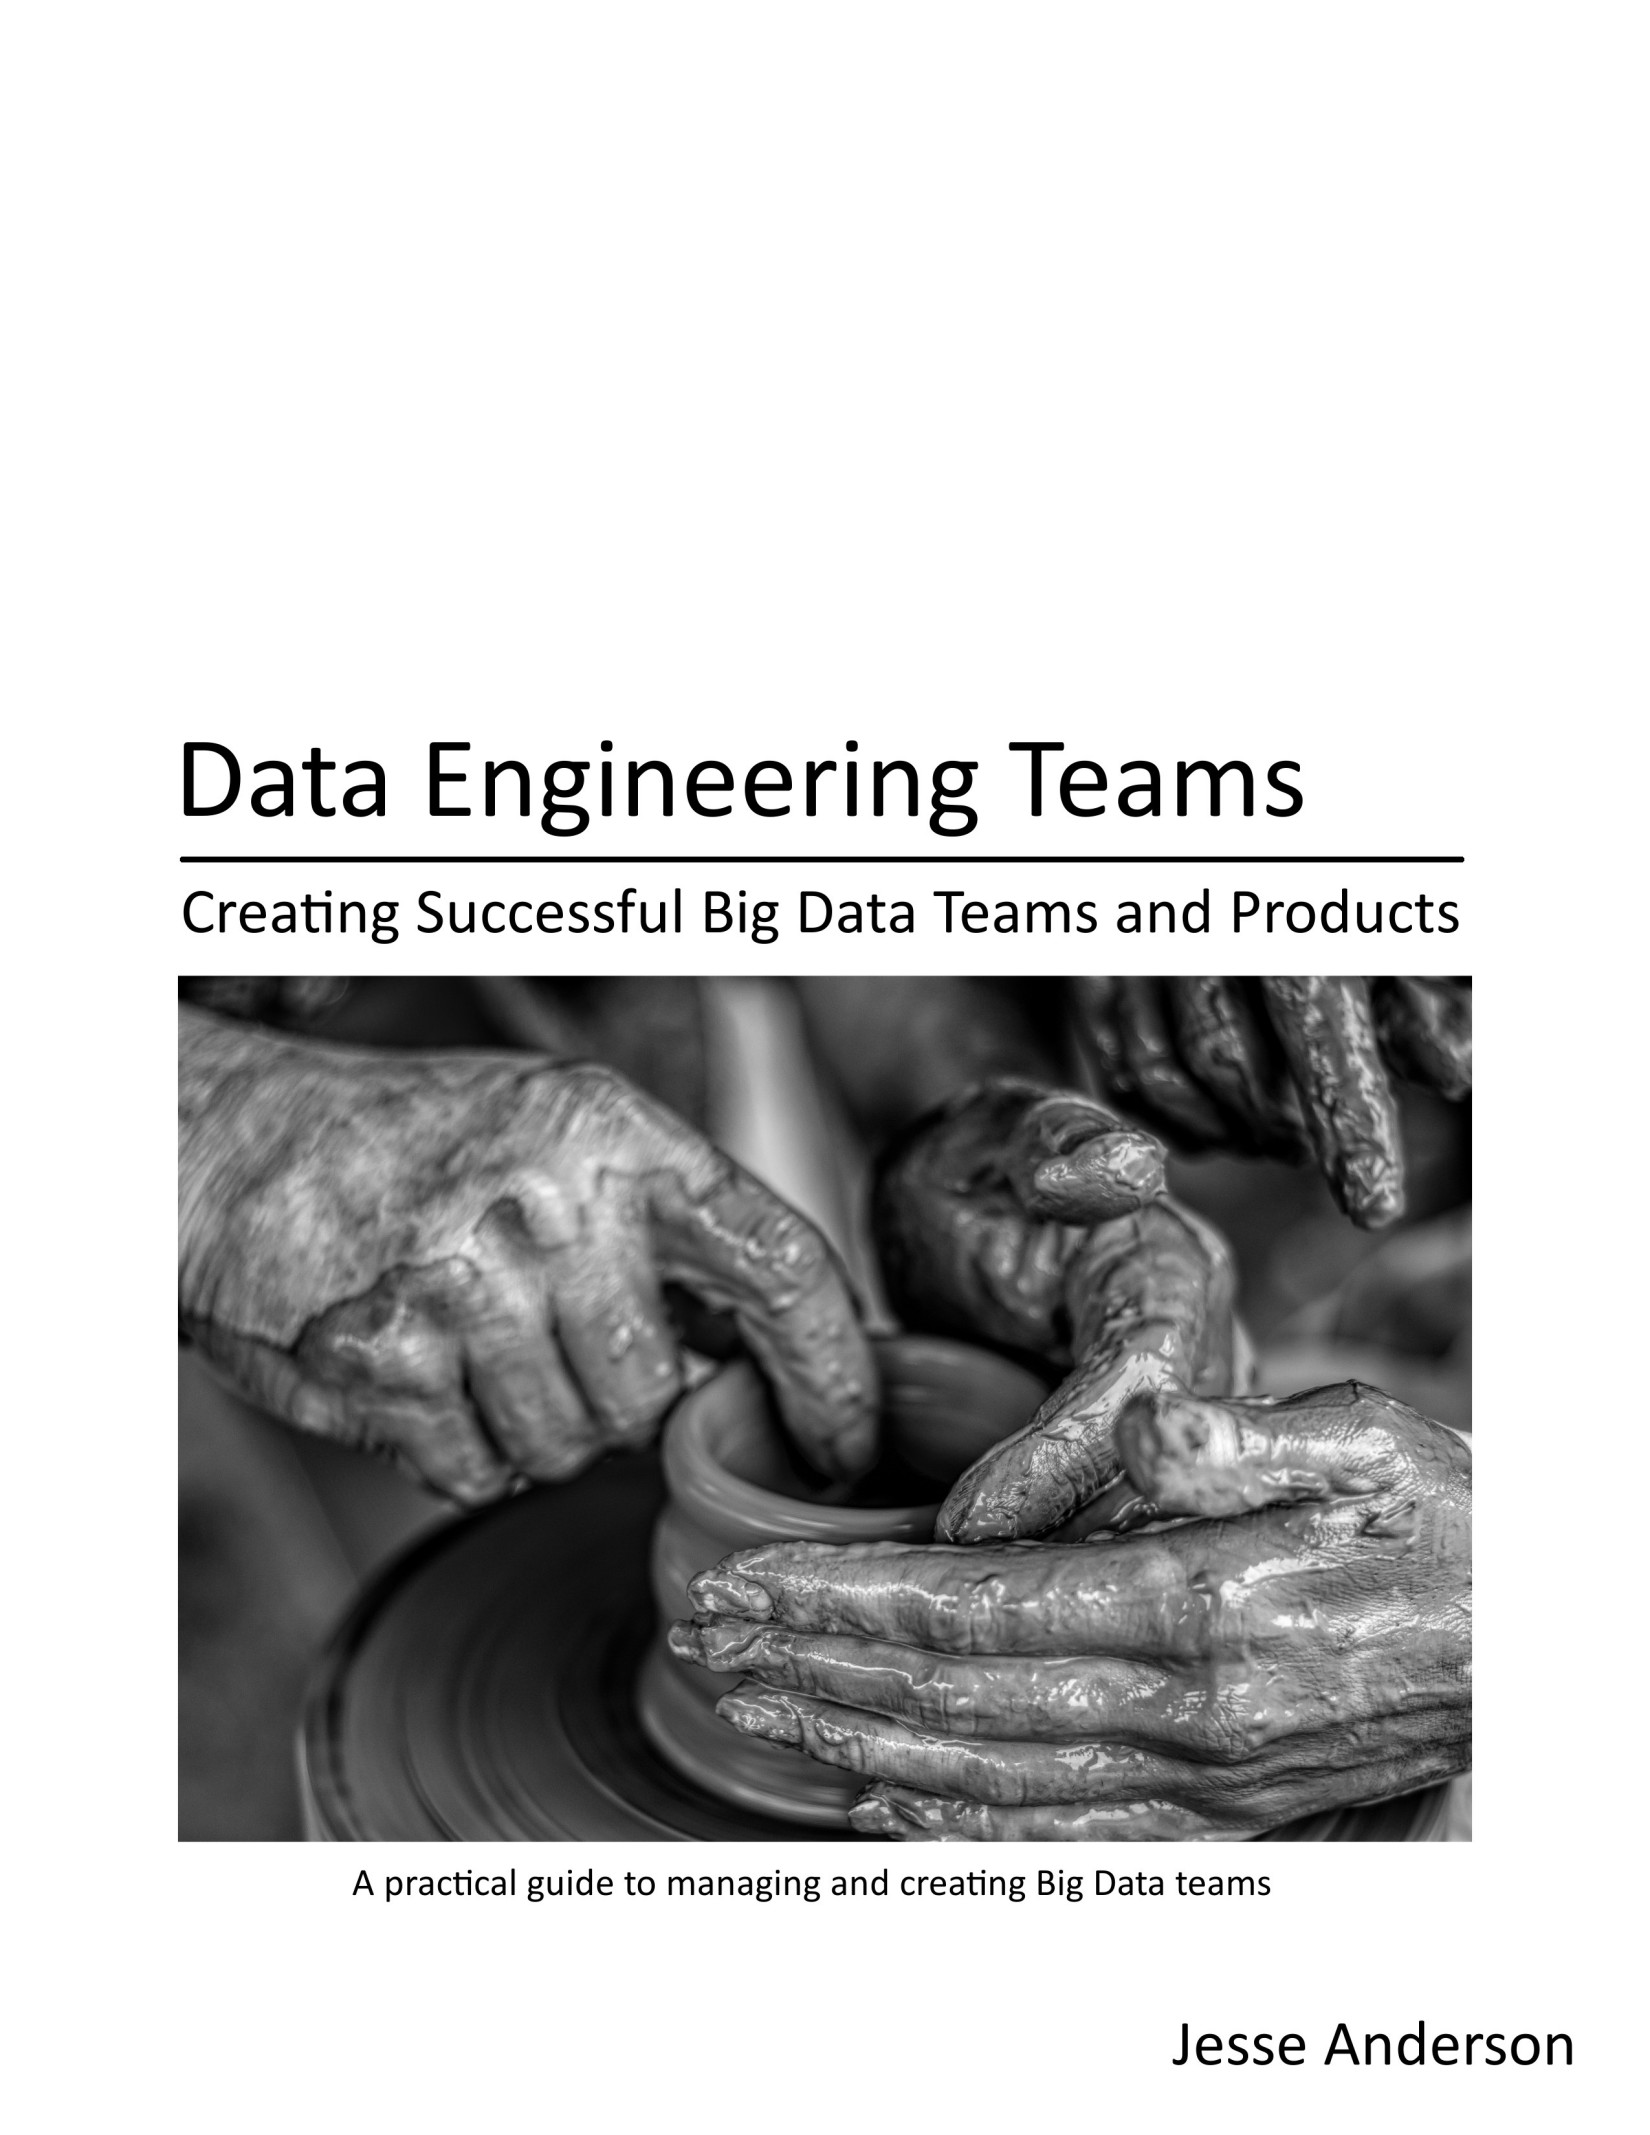 Data Engineering Teams - Creating Successful Big Data Teams and Products